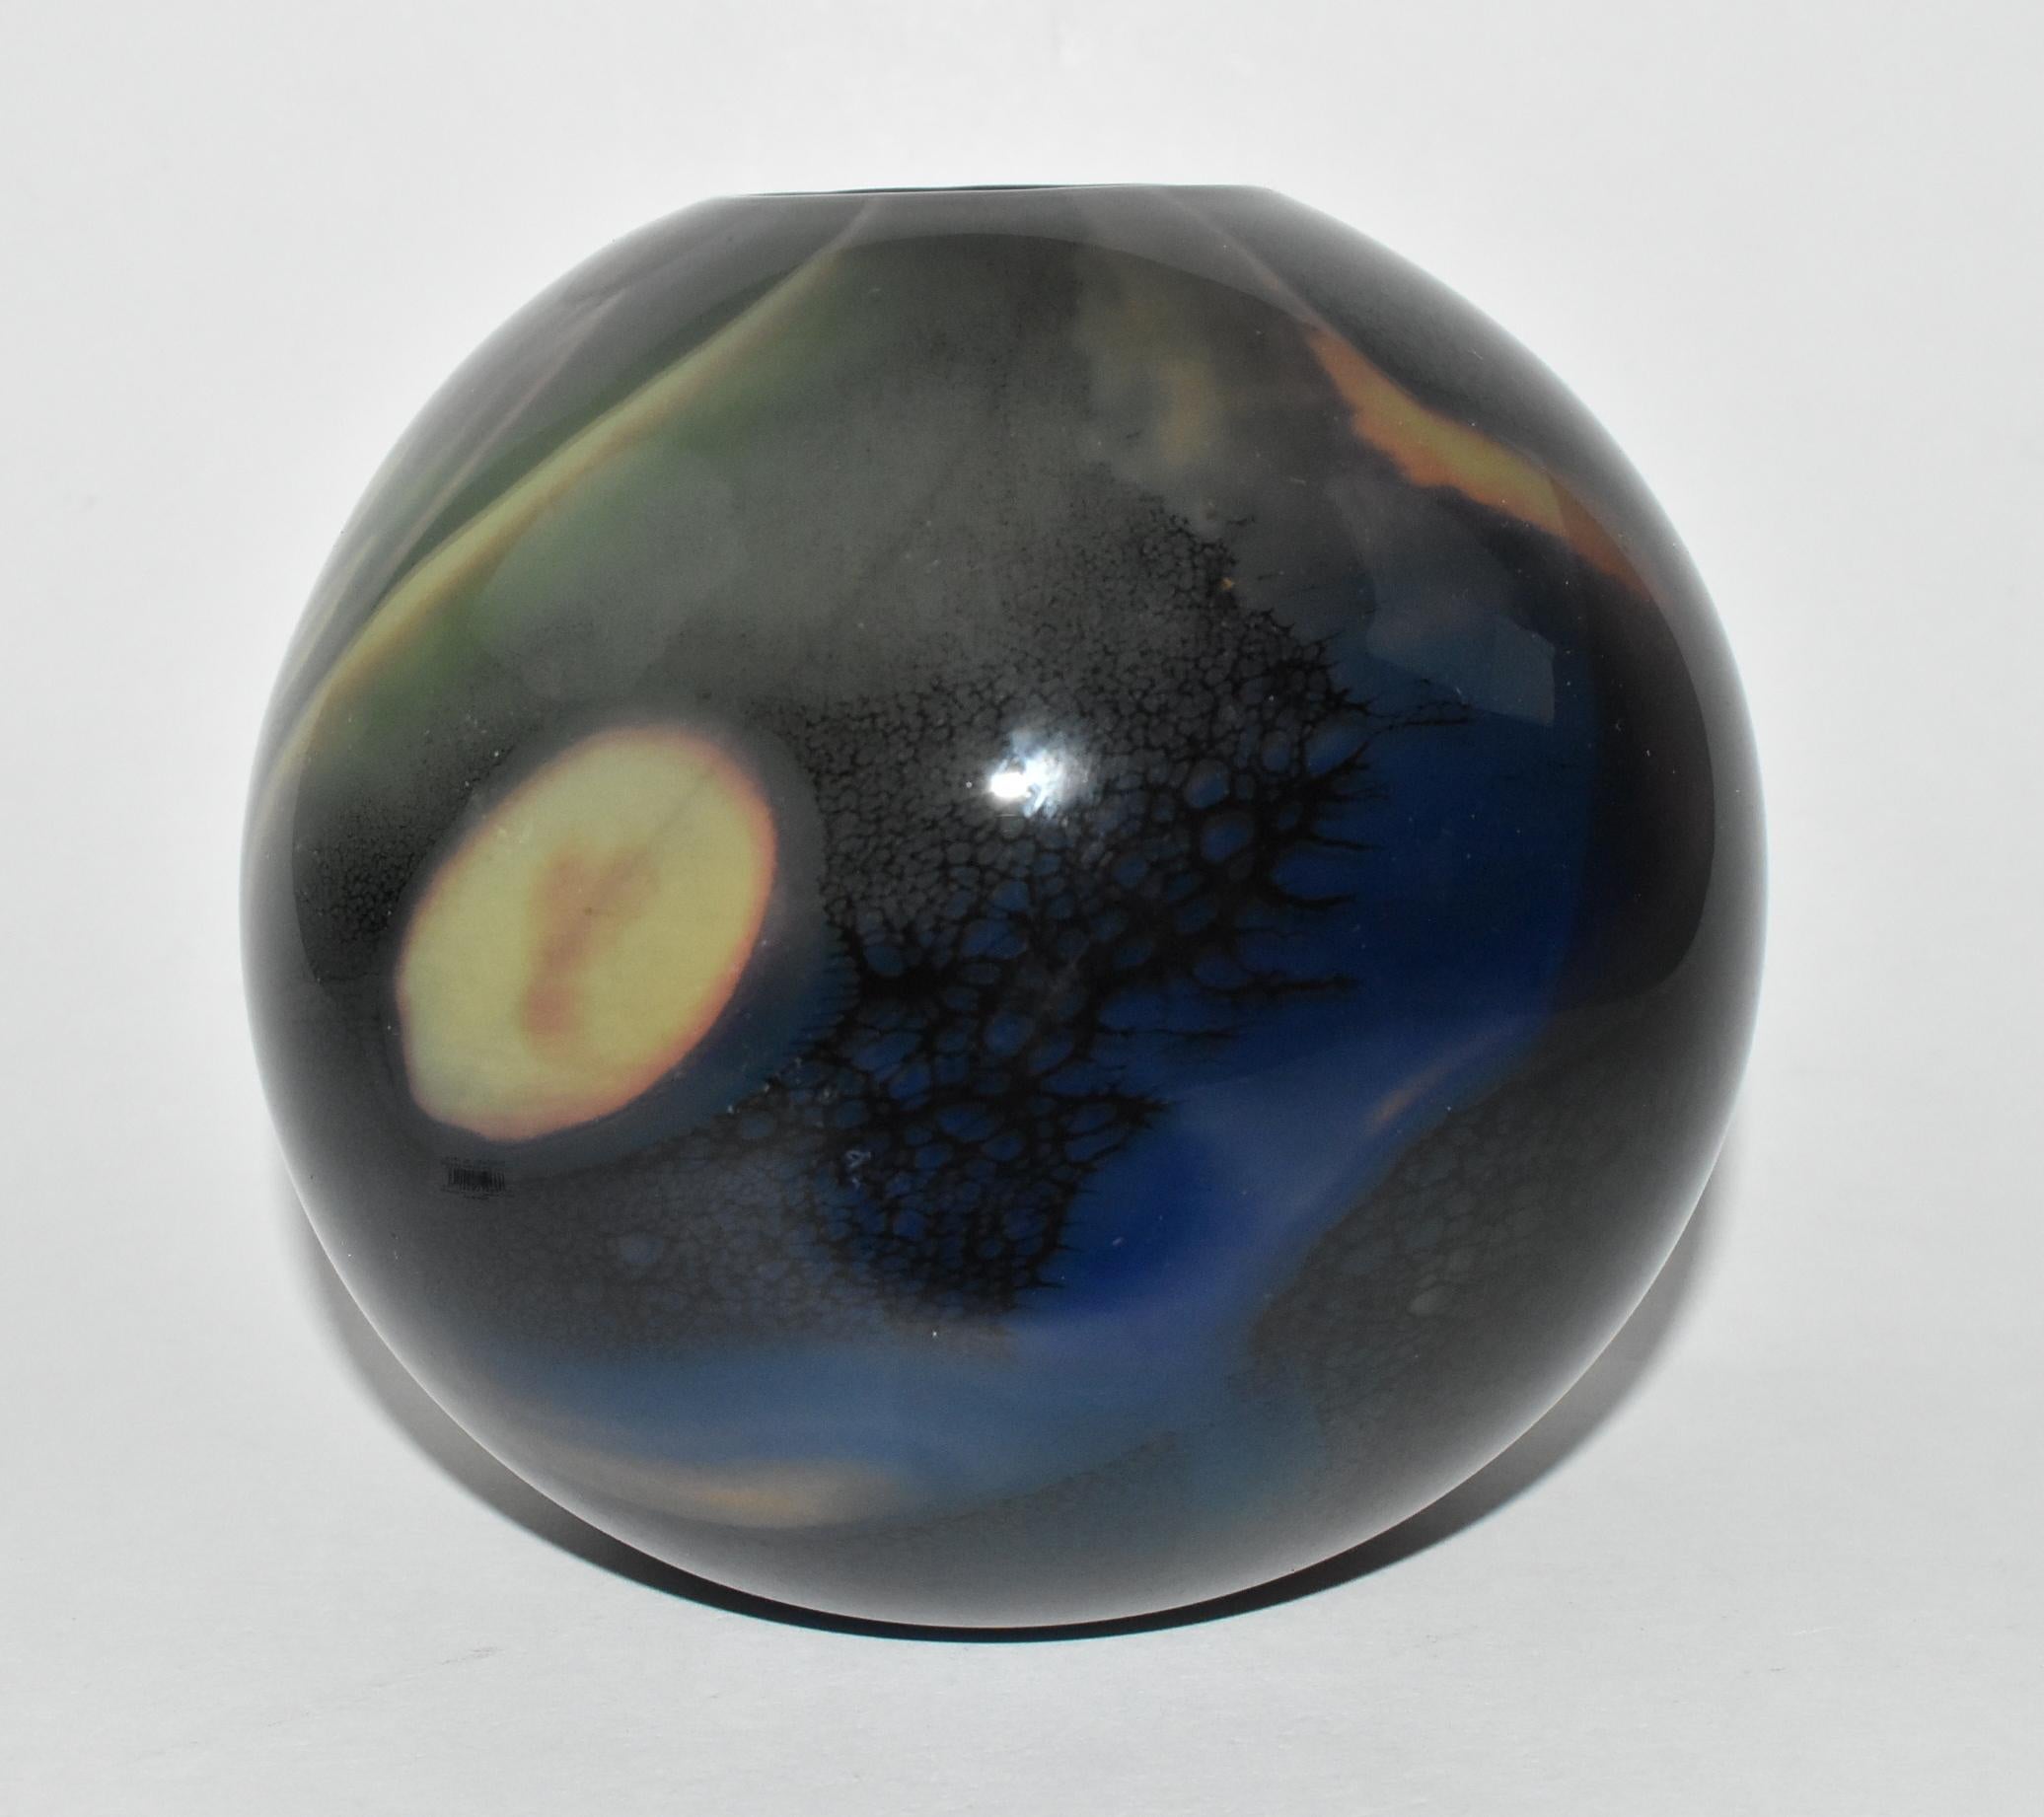 Glass Eva Englund Graal Vase #964130, 1987, for Orrefors